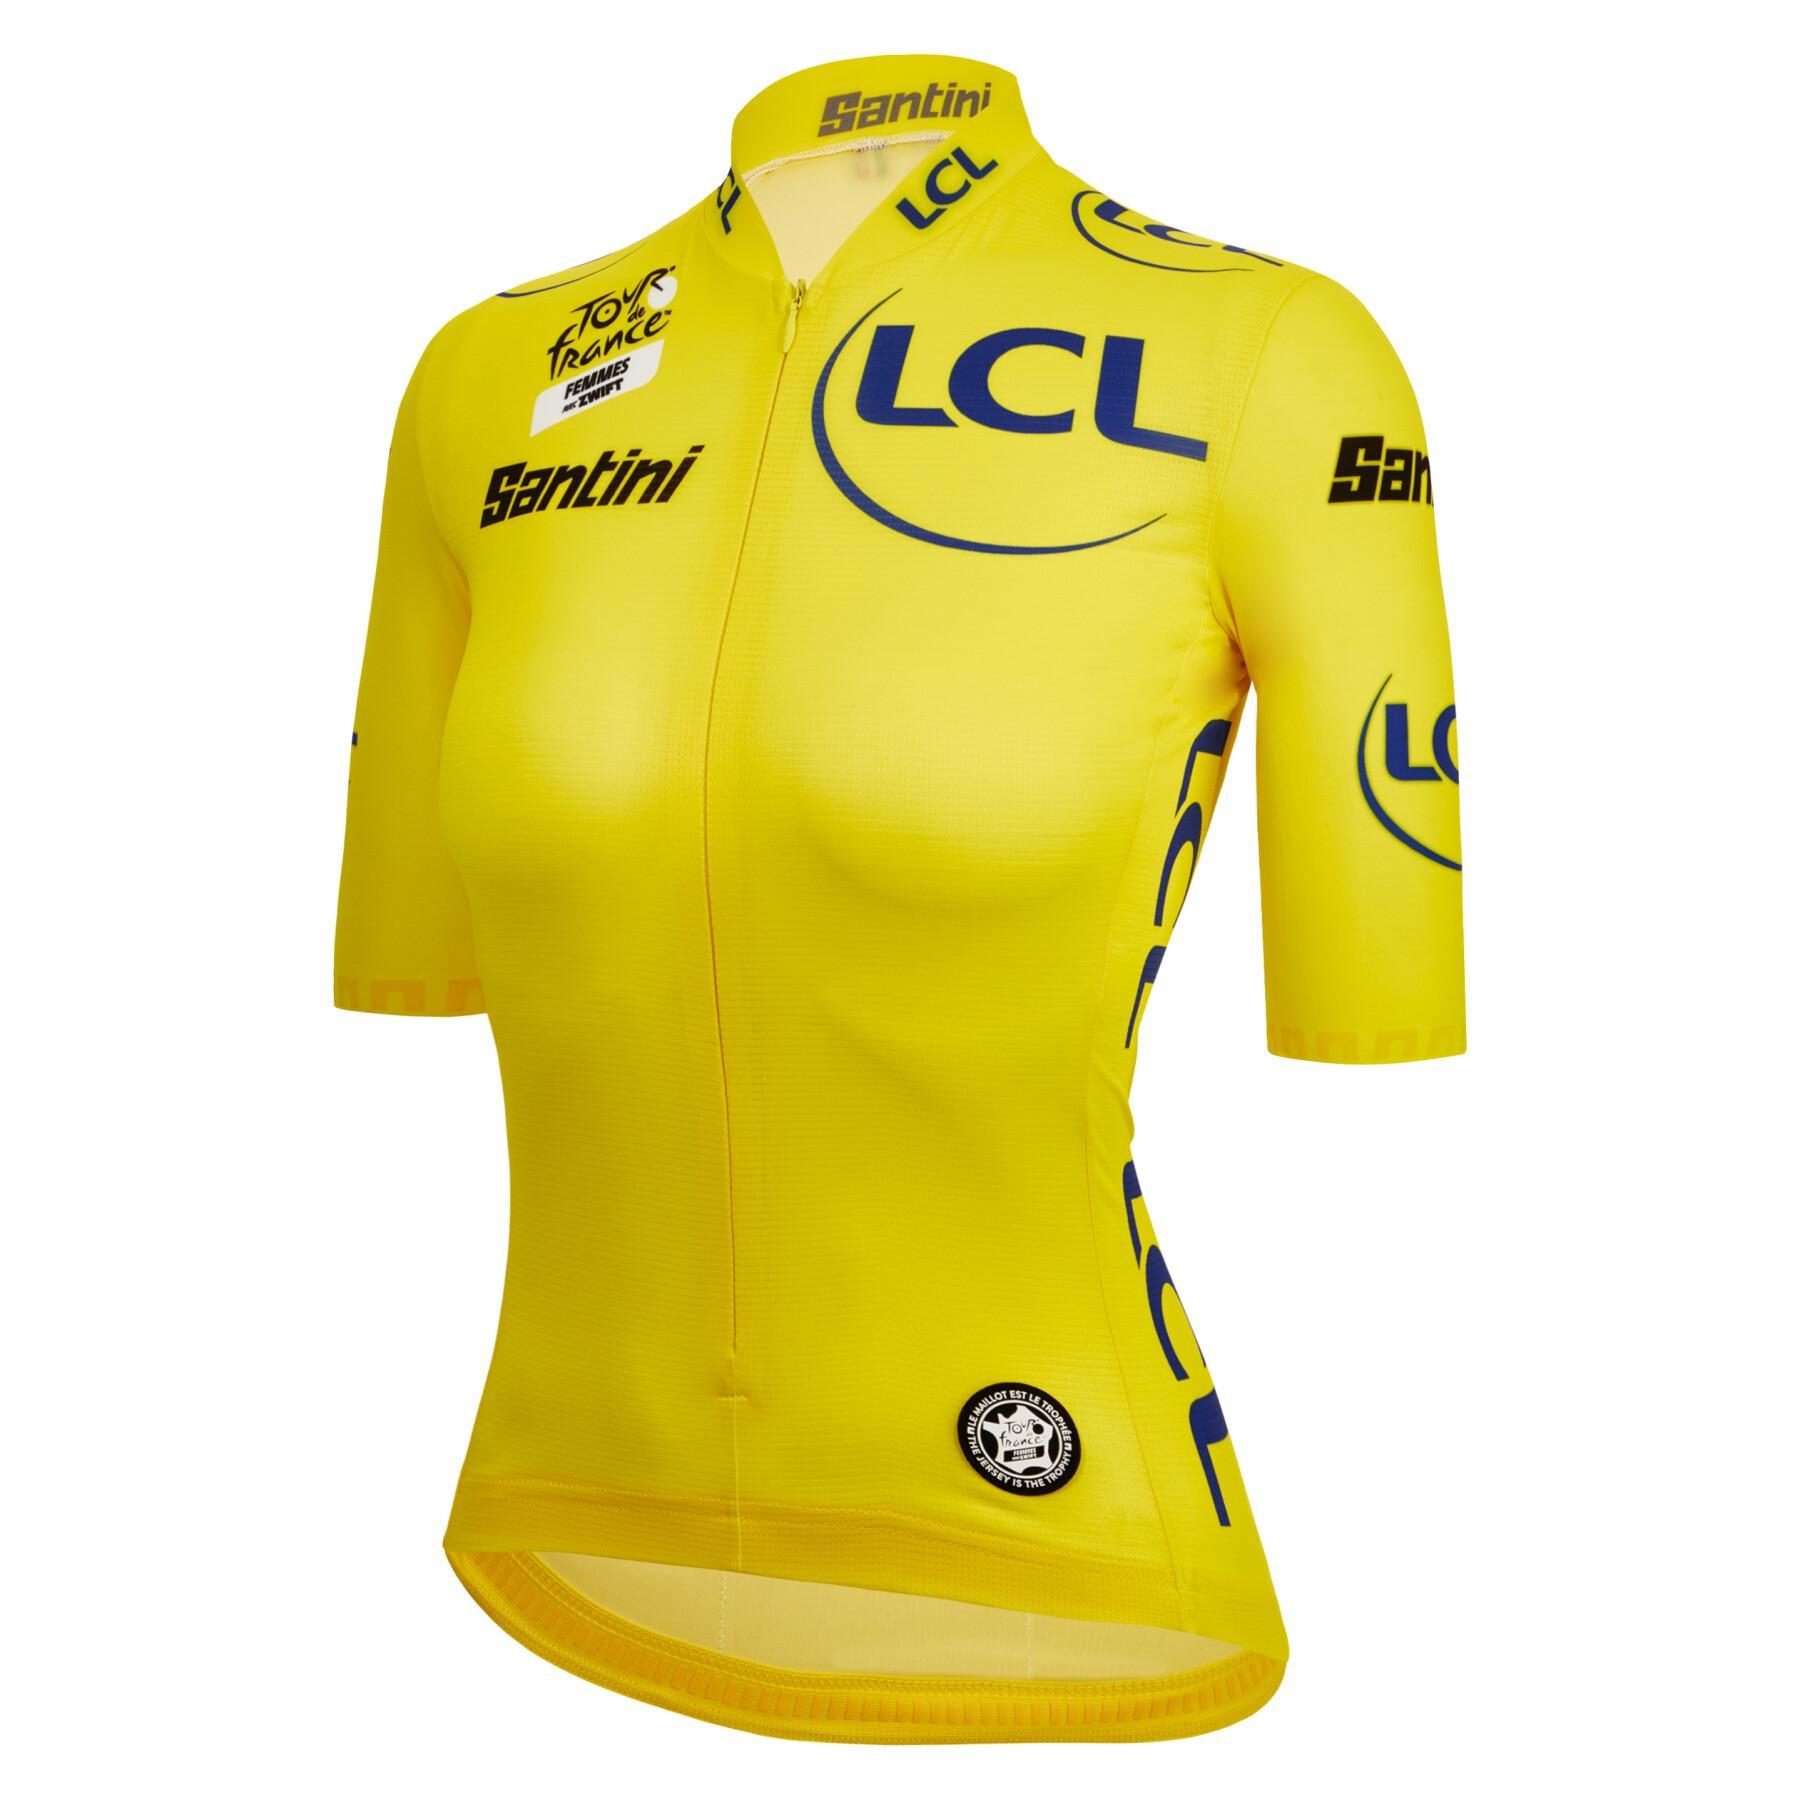 Maglia femminile Santini Tour de France